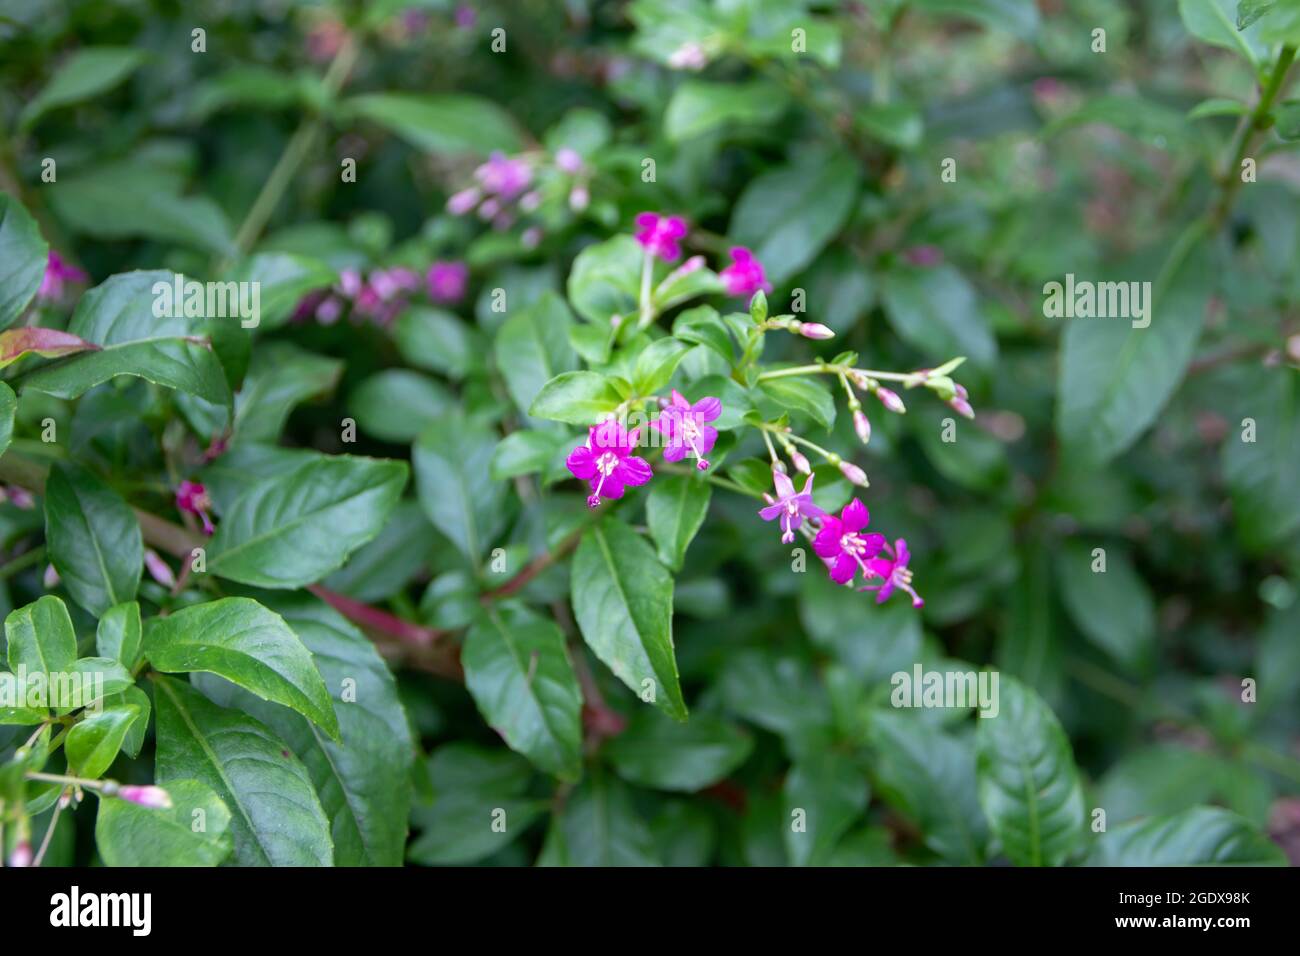 Fuchsia Trientje hybrid F. encliandra x F. paniculata. Pink flowers and green leaves Stock Photo